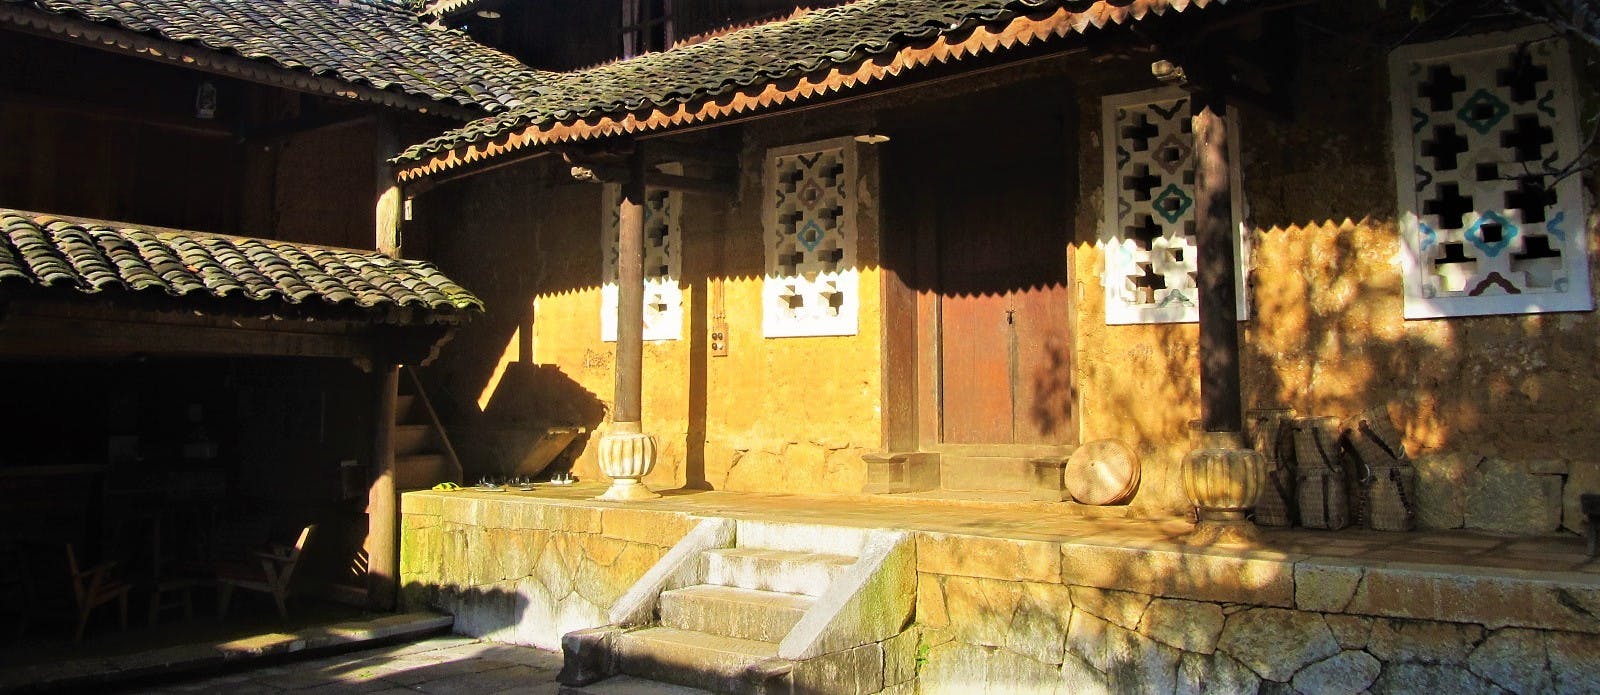 Auberge de Meo Vac Mountain Lodge, Chung Pua, Ha Giang